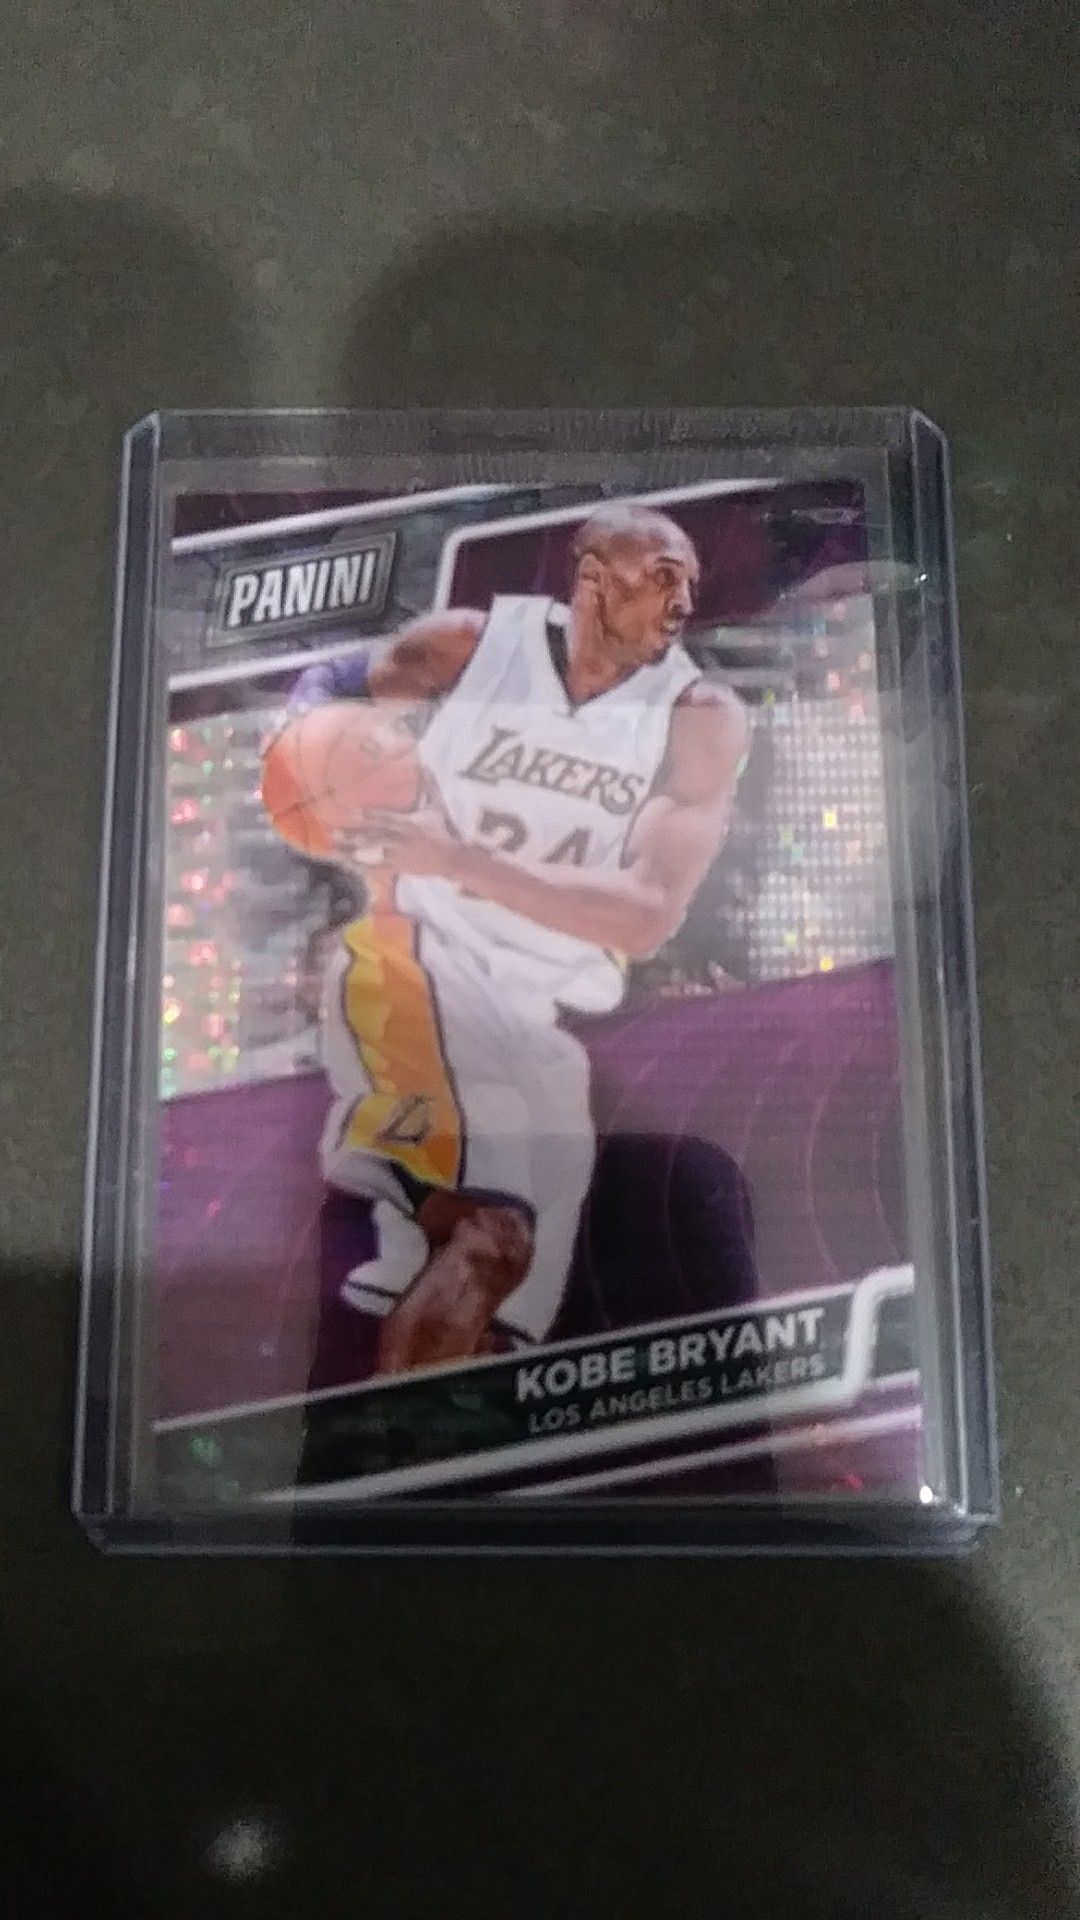 Kobe Bryant Panini card#1